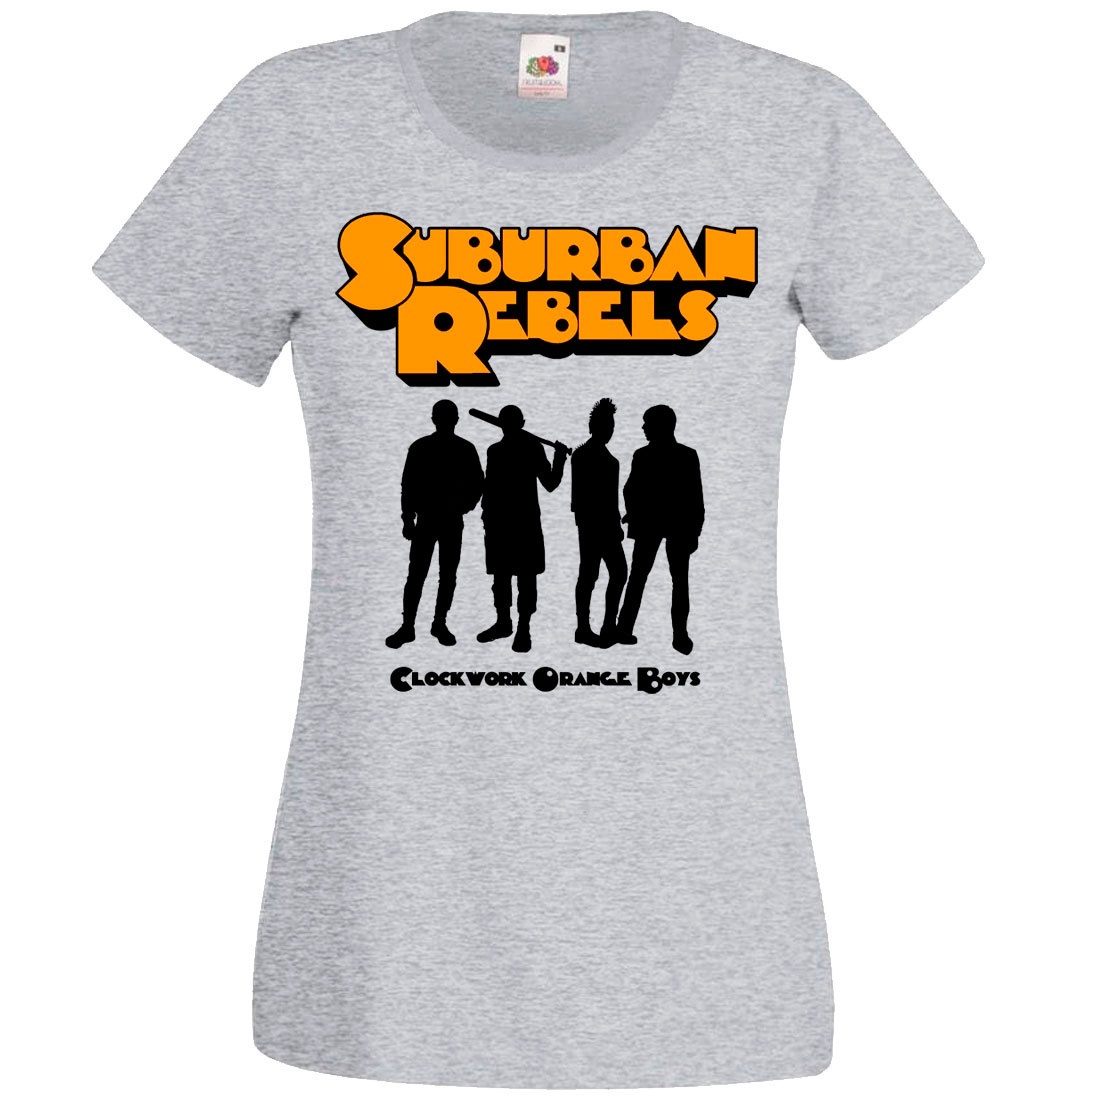 Imagen de la camiseta de chica SUBURBAN REBELS Clockwork Orange Boys